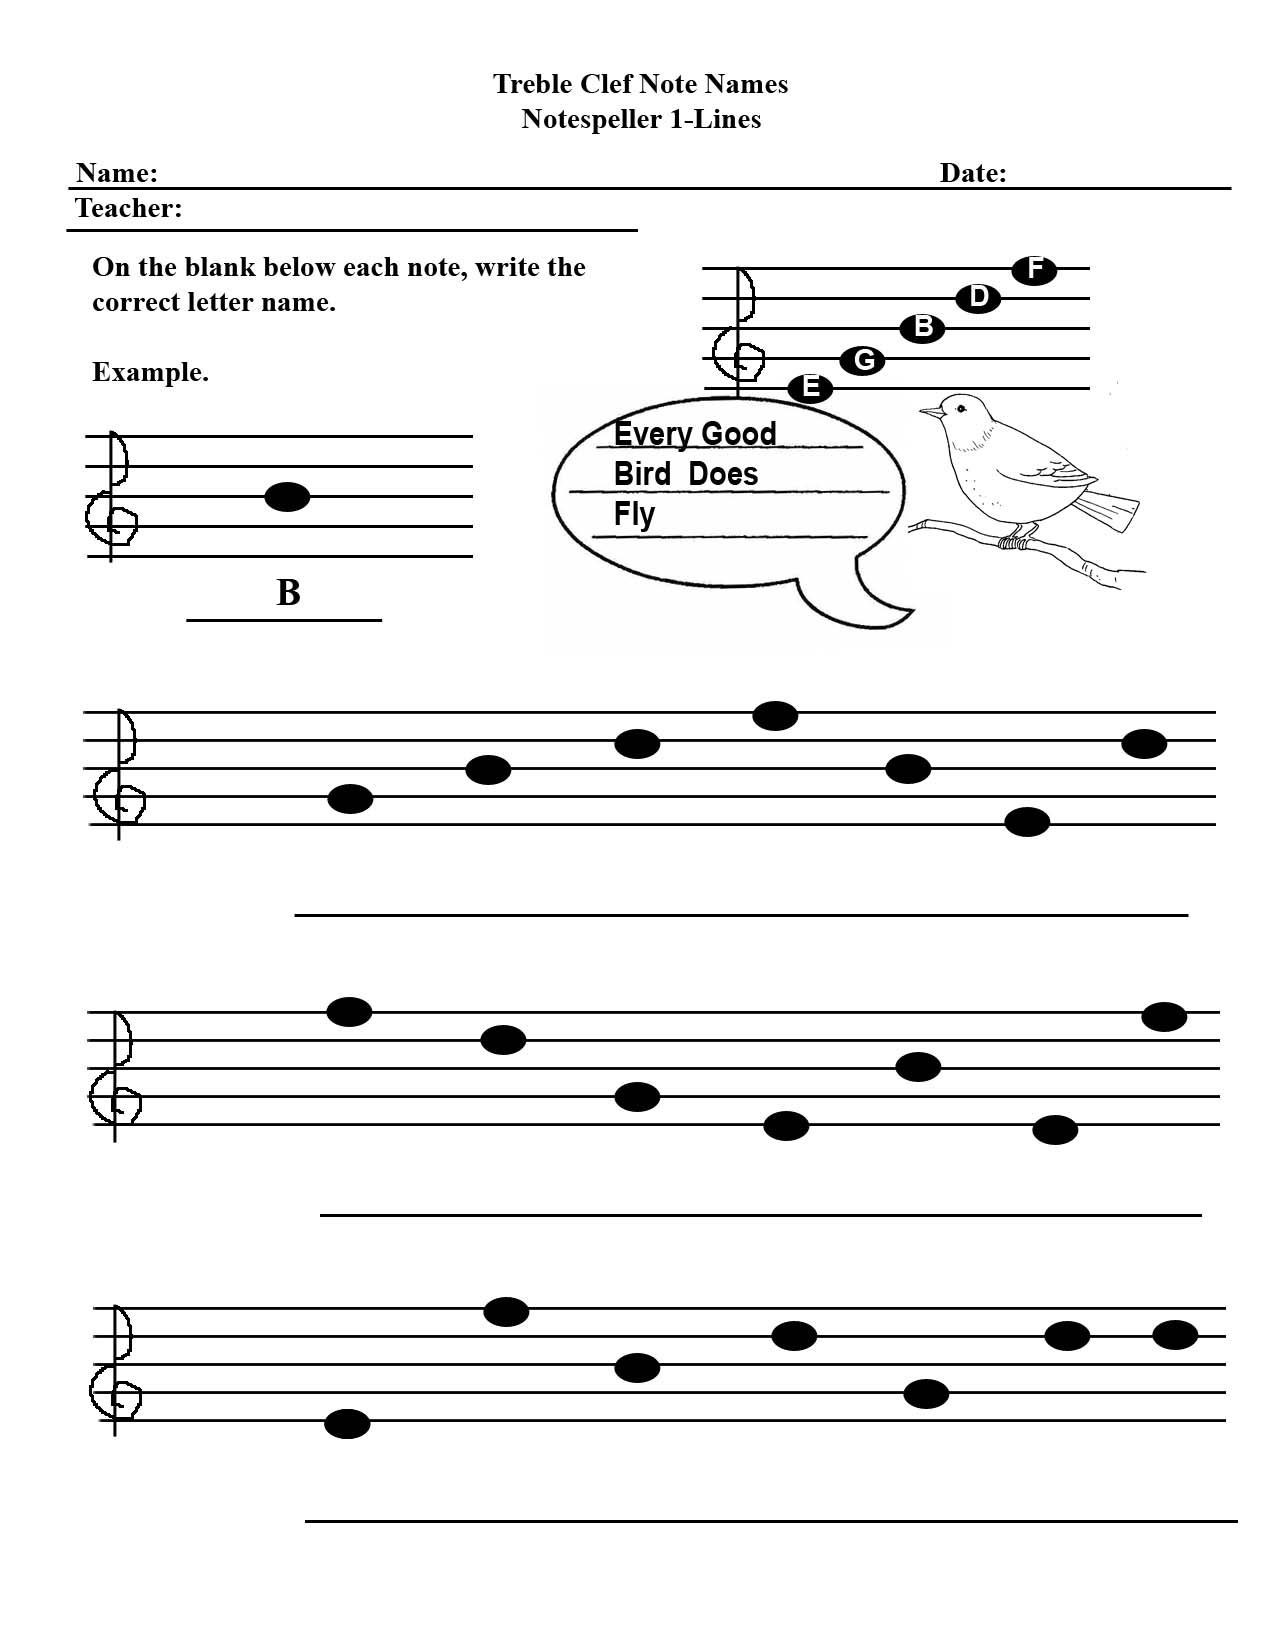 Treble Clef Notes Worksheet Christy Lovenduski Teaching Studio Elementary Music